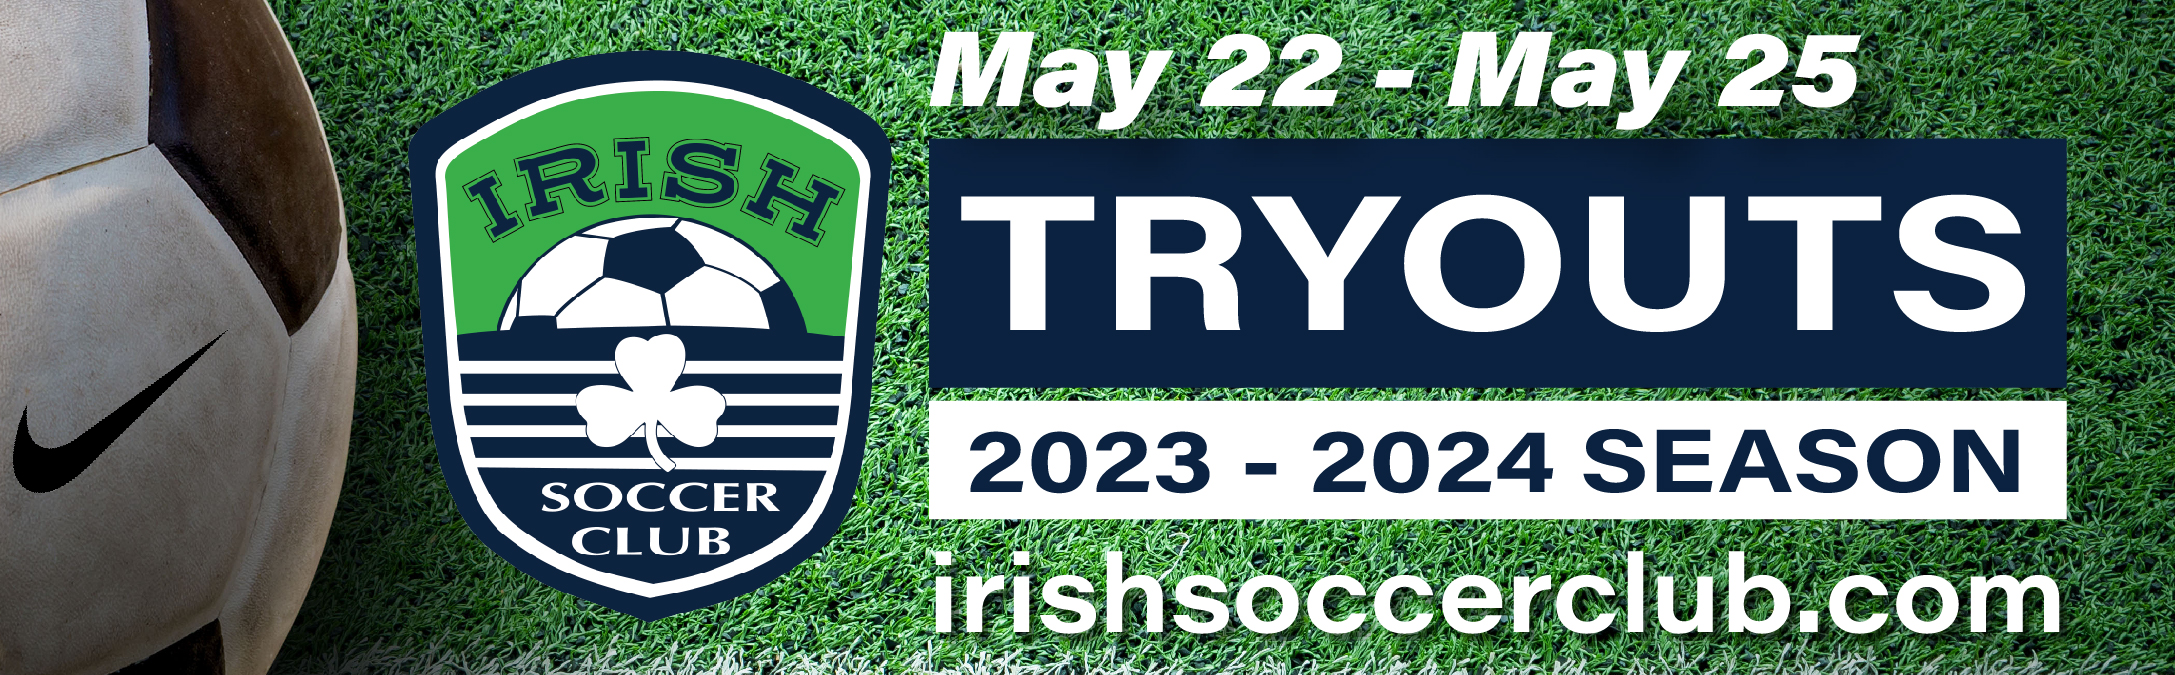 2023 2024 Tryout Information Irish Soccer Club